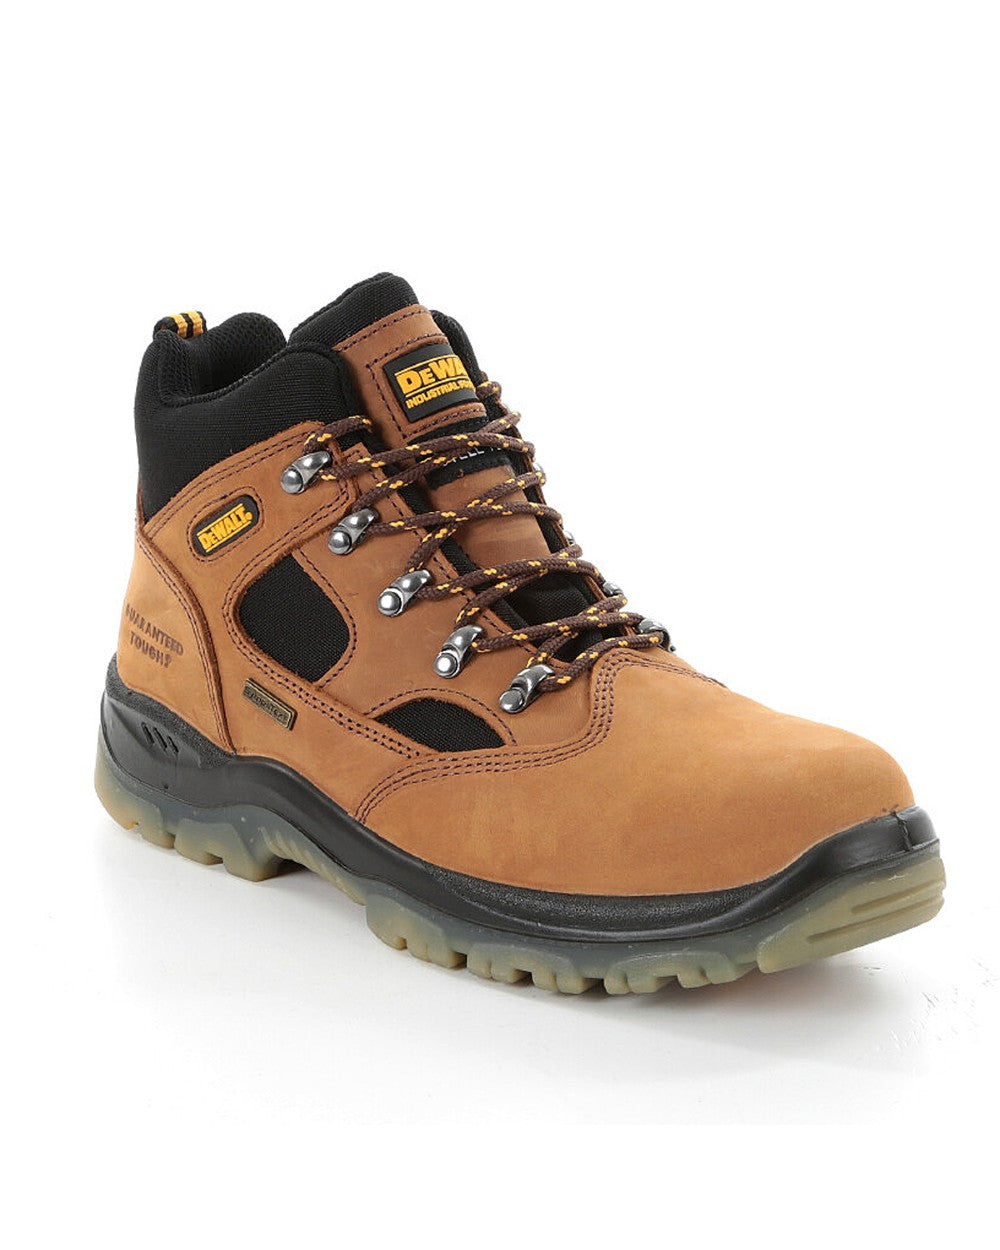 DeWalt Challenger Waterproof Safety Hiker Boots in Brown 